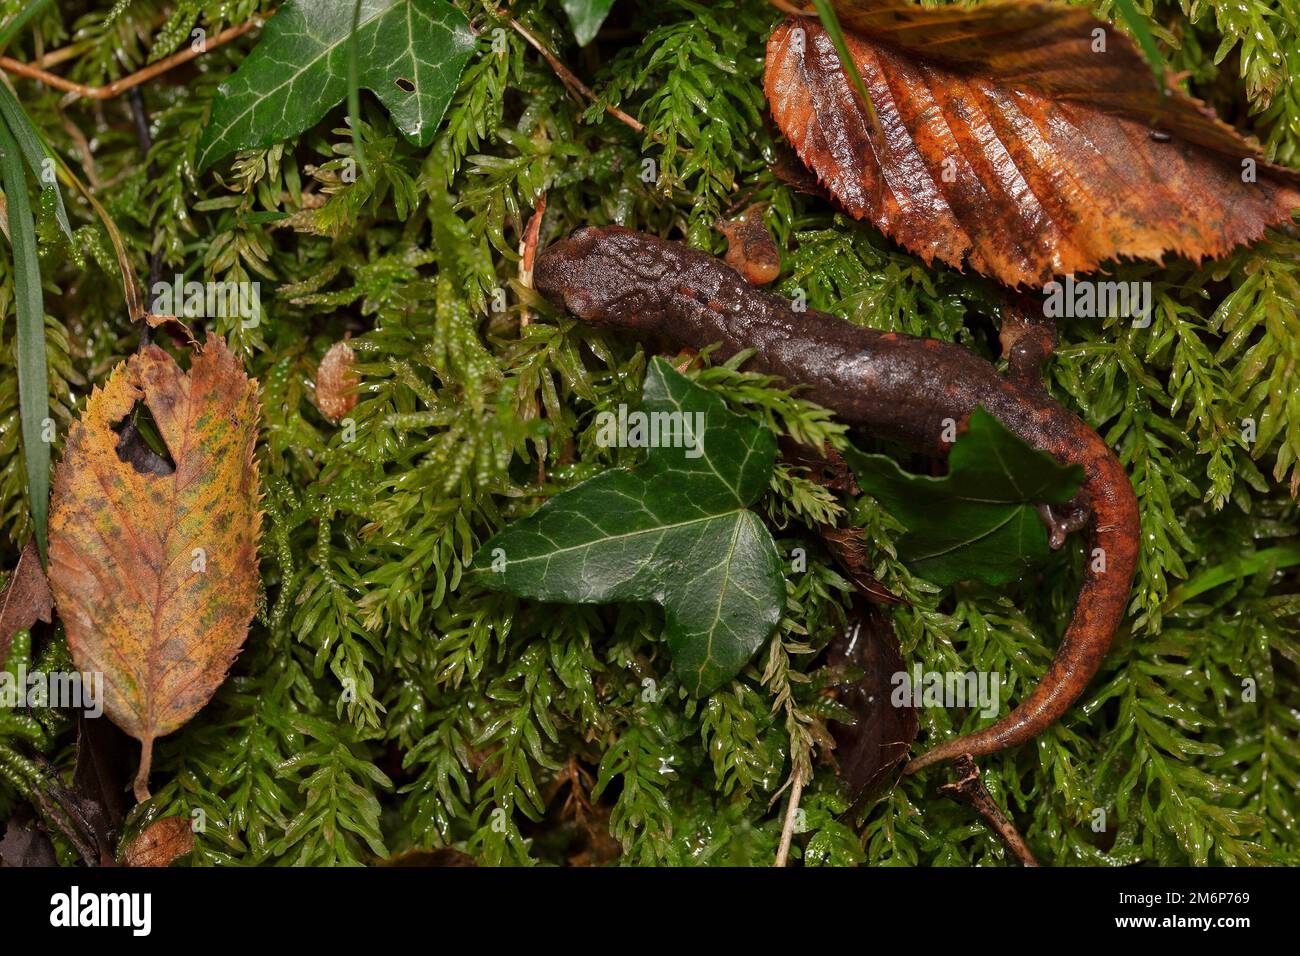 Italian Cave Salamander (Speleomantes italicus) - geotritone italiano Stock Photo